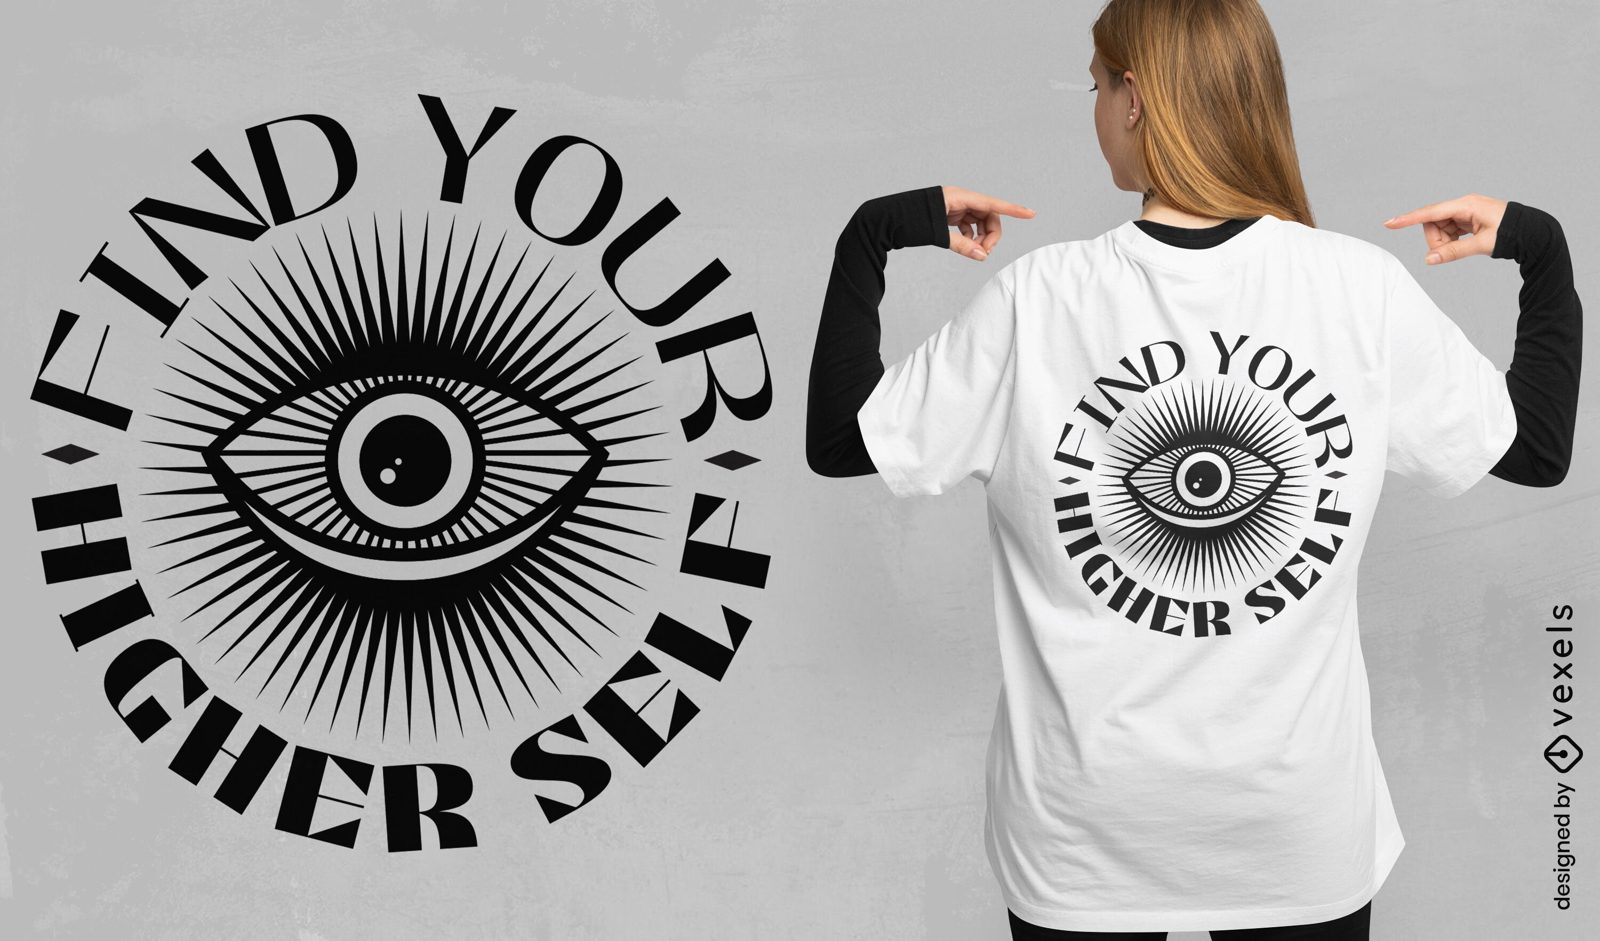 Find your higher self t-shirt design